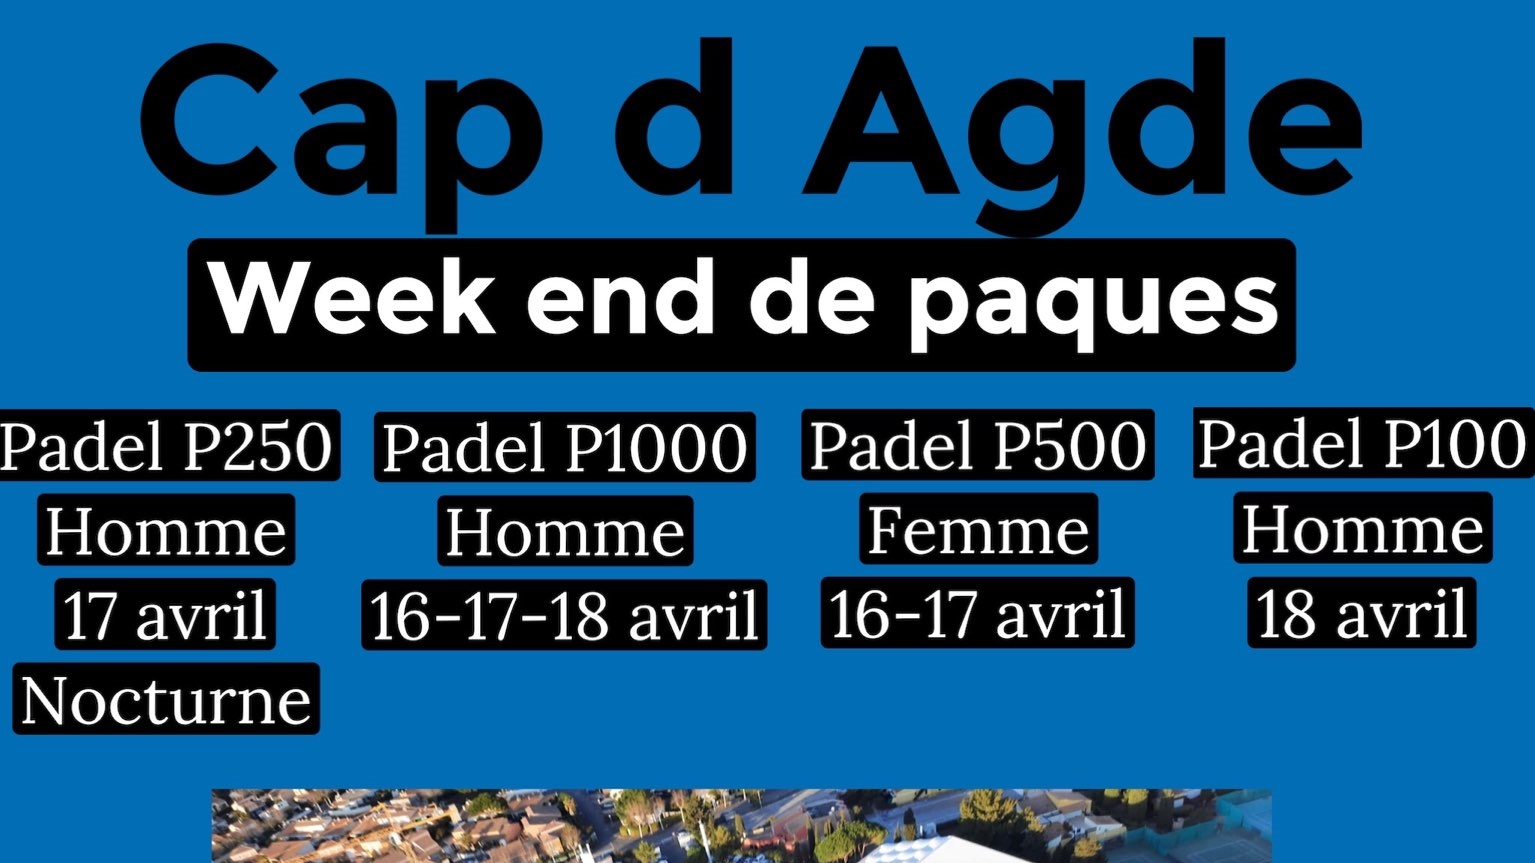 Cap d'Agde: P100 bis P1000 vom 16. bis 18. April